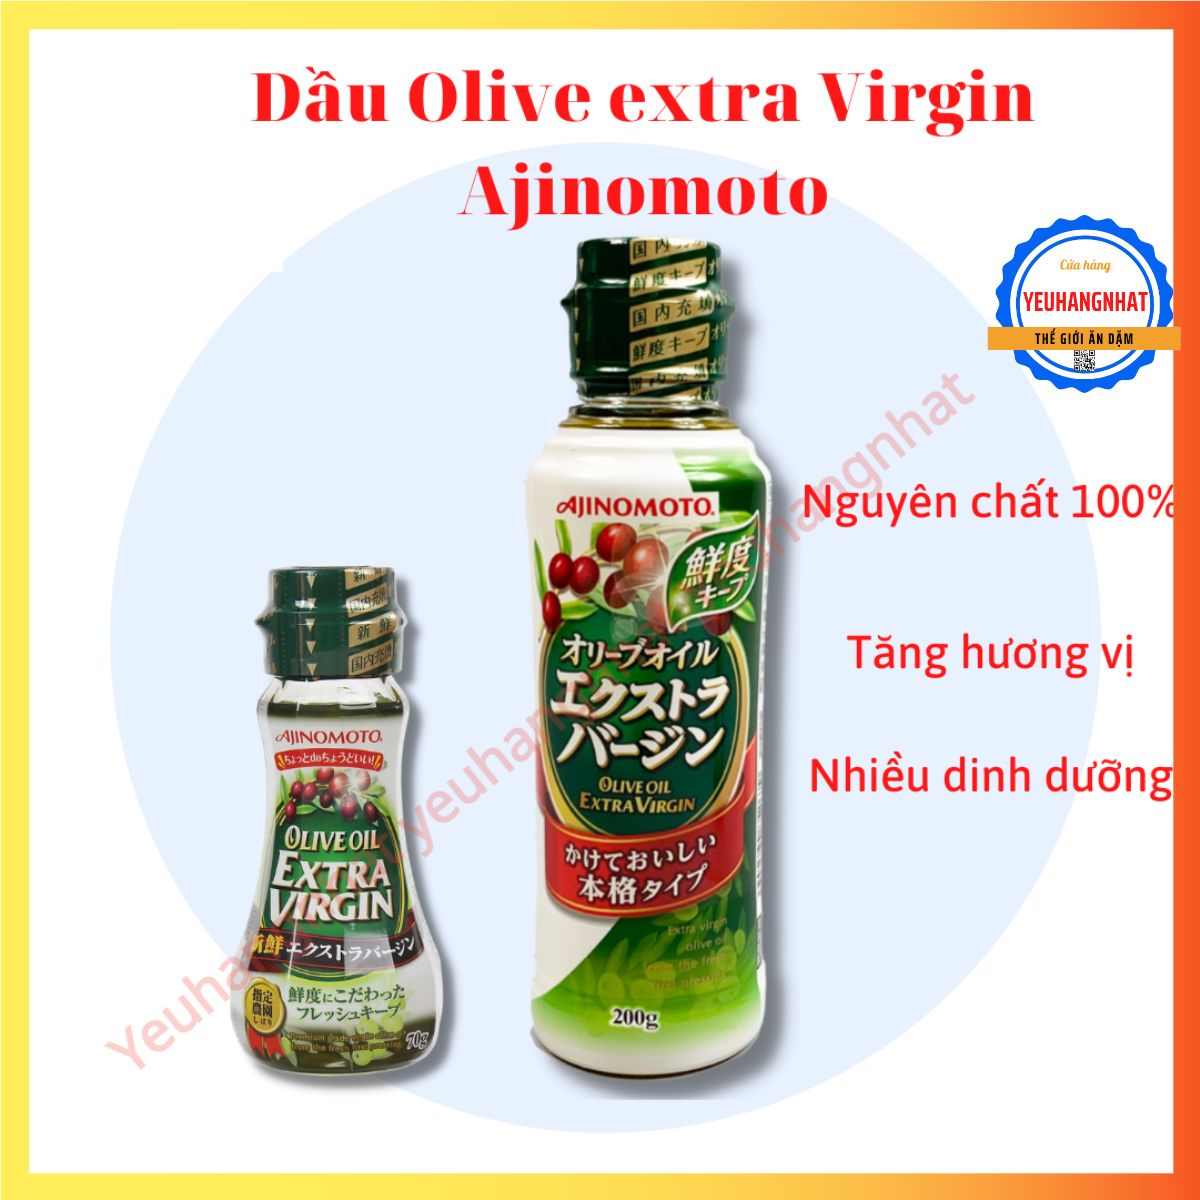 Dầu Olive Extra Virgin Ajinomoto Nhật bản 70g và 200g - dầu Oliu